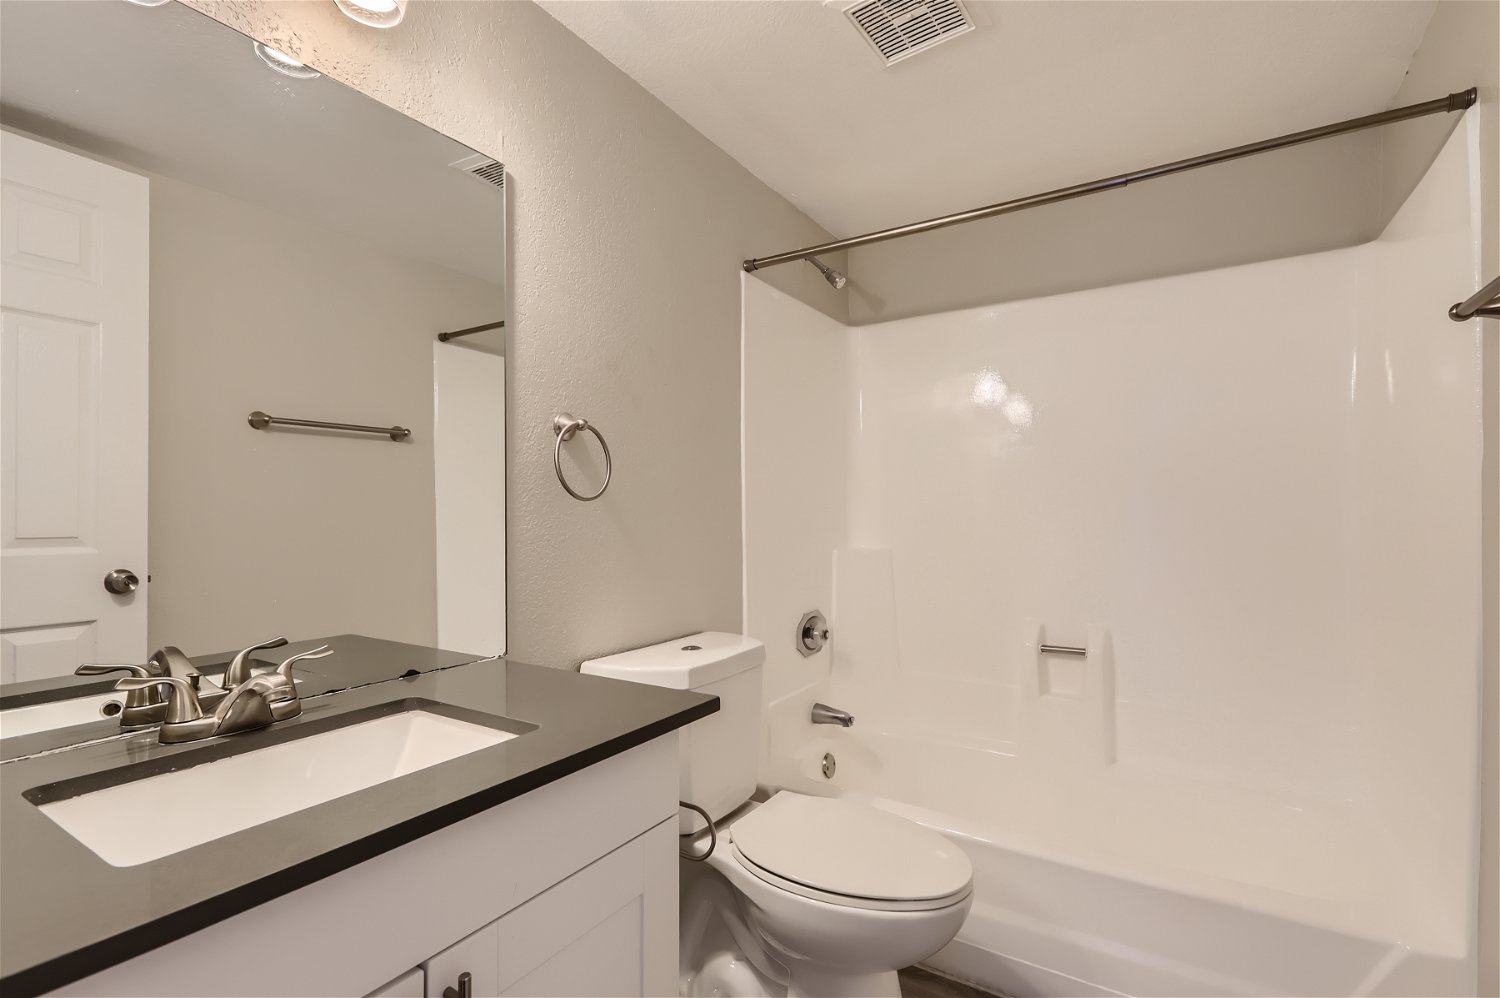 A bathroom with grey a quartz countertop and a tub at Rise Trailside. 